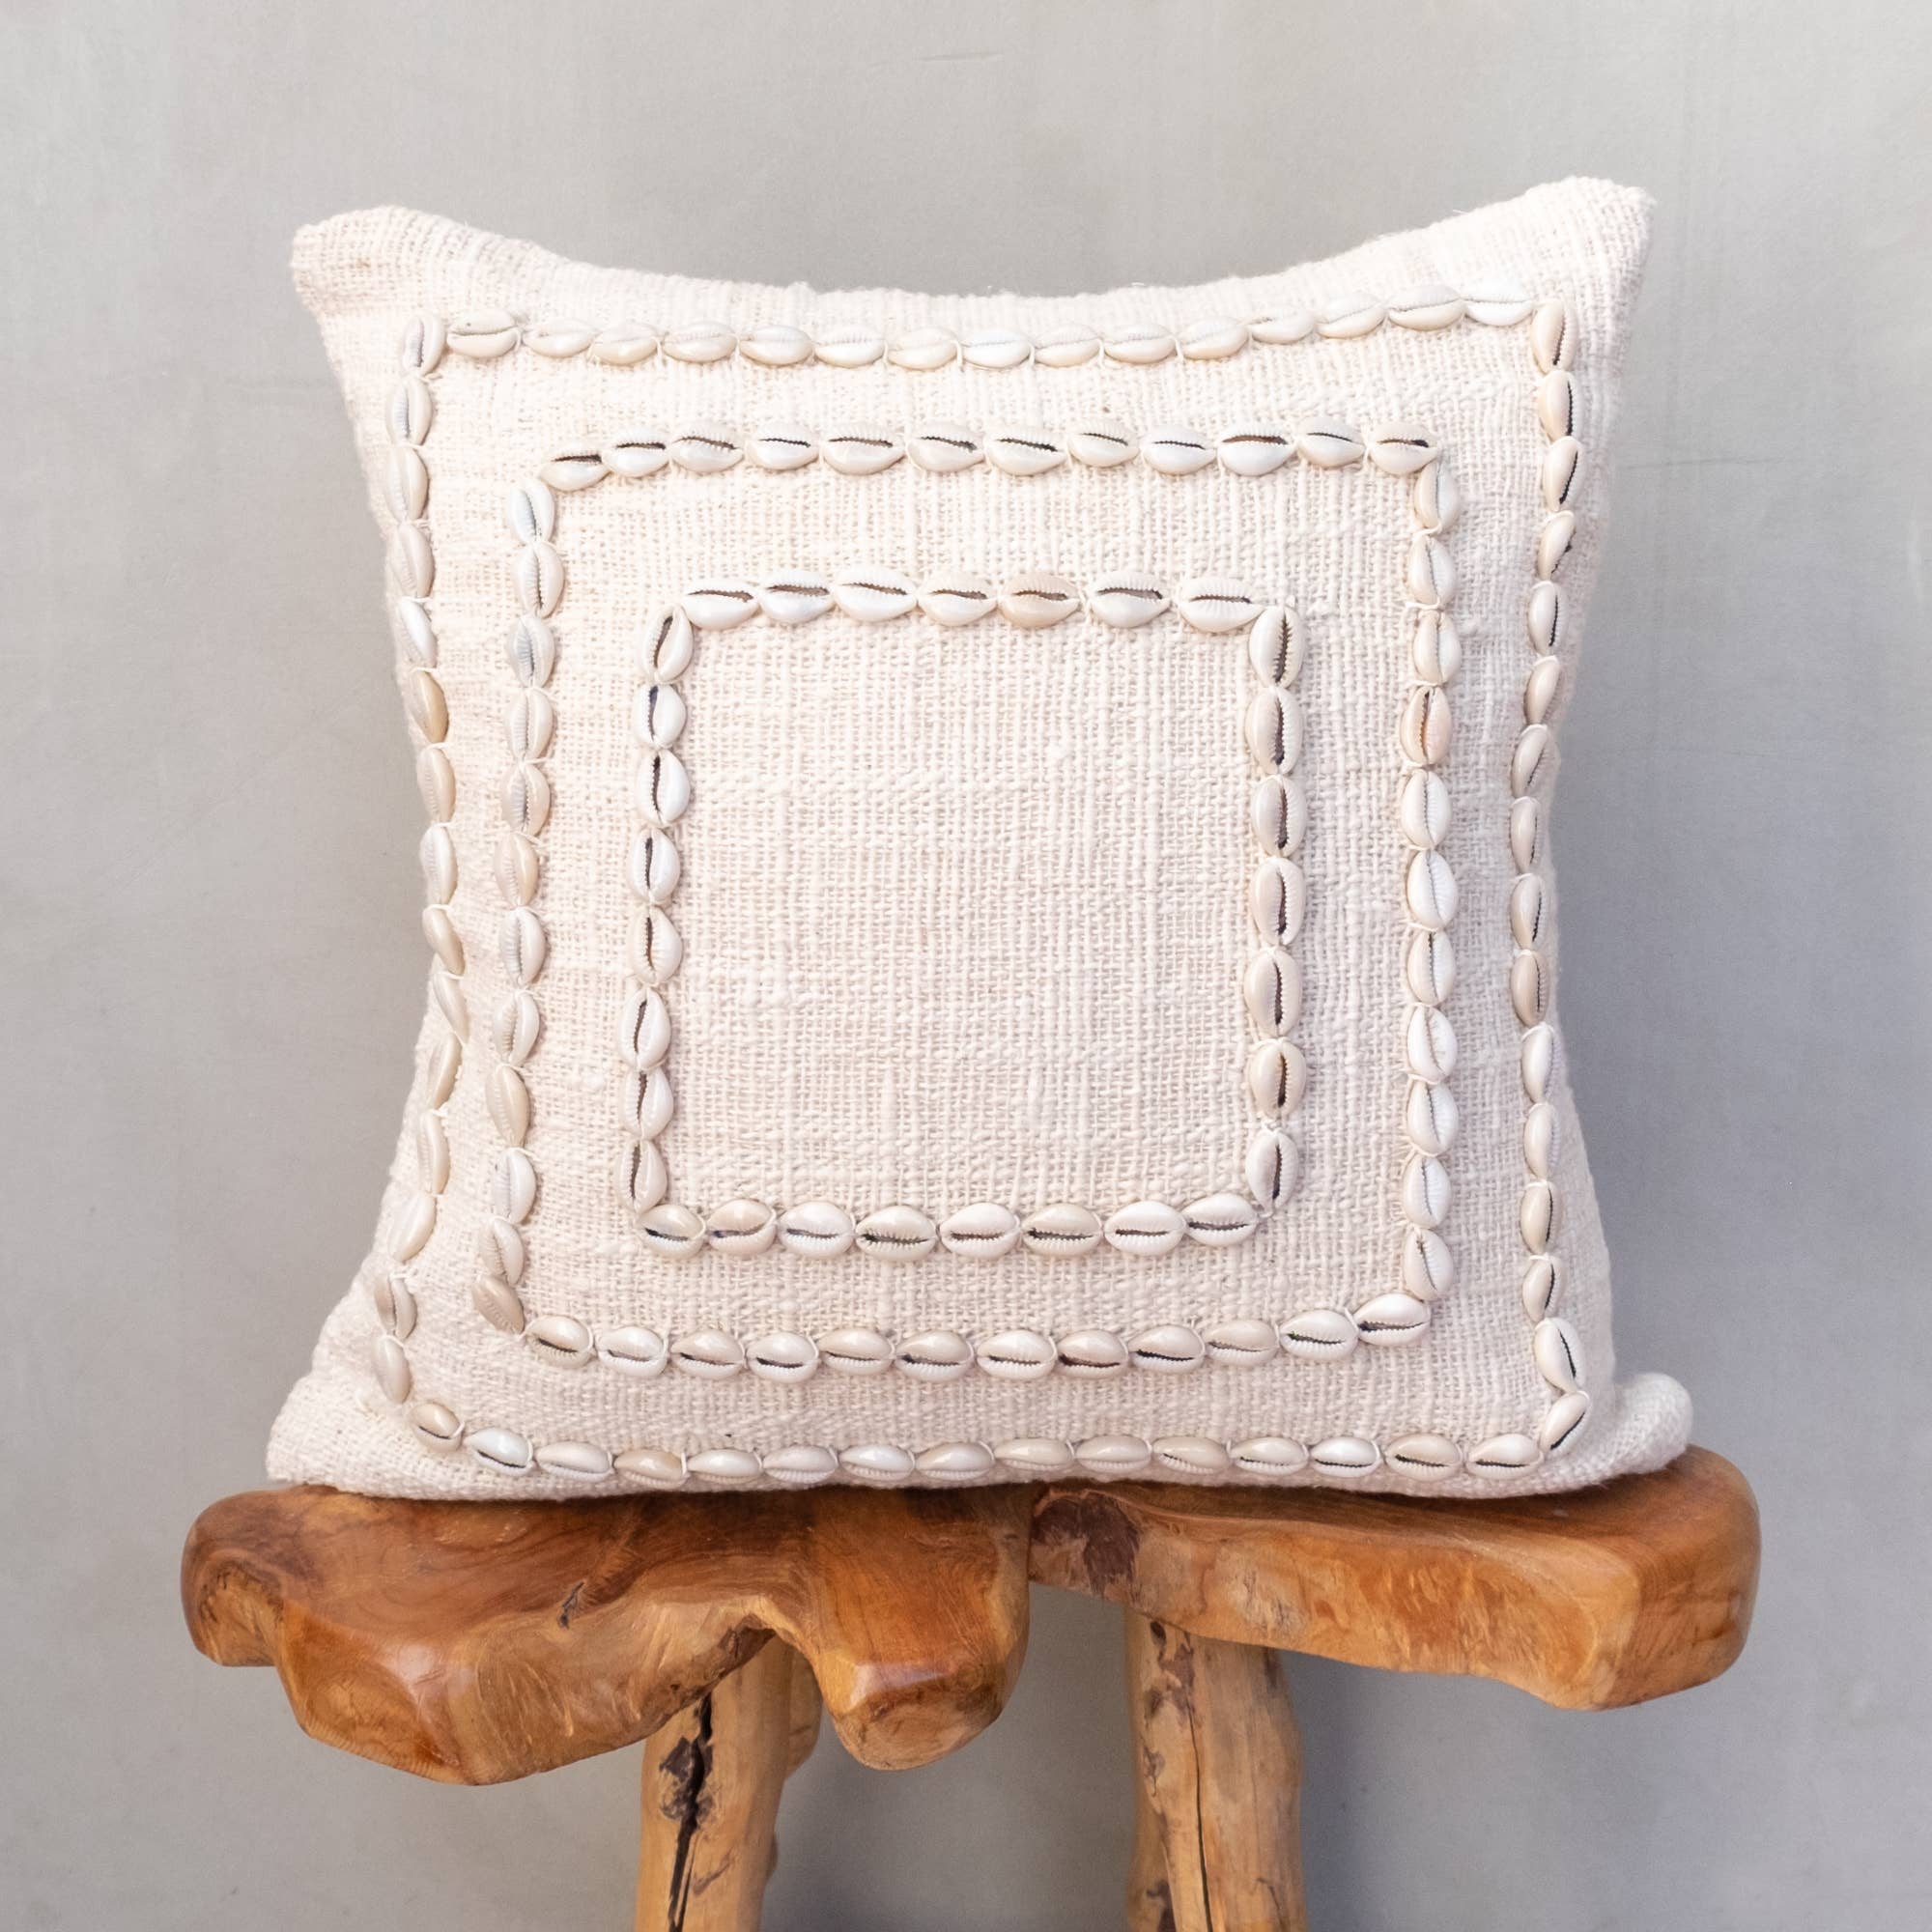 Island Cushion Cover | Throw Pillow - Square Cowrie Shell